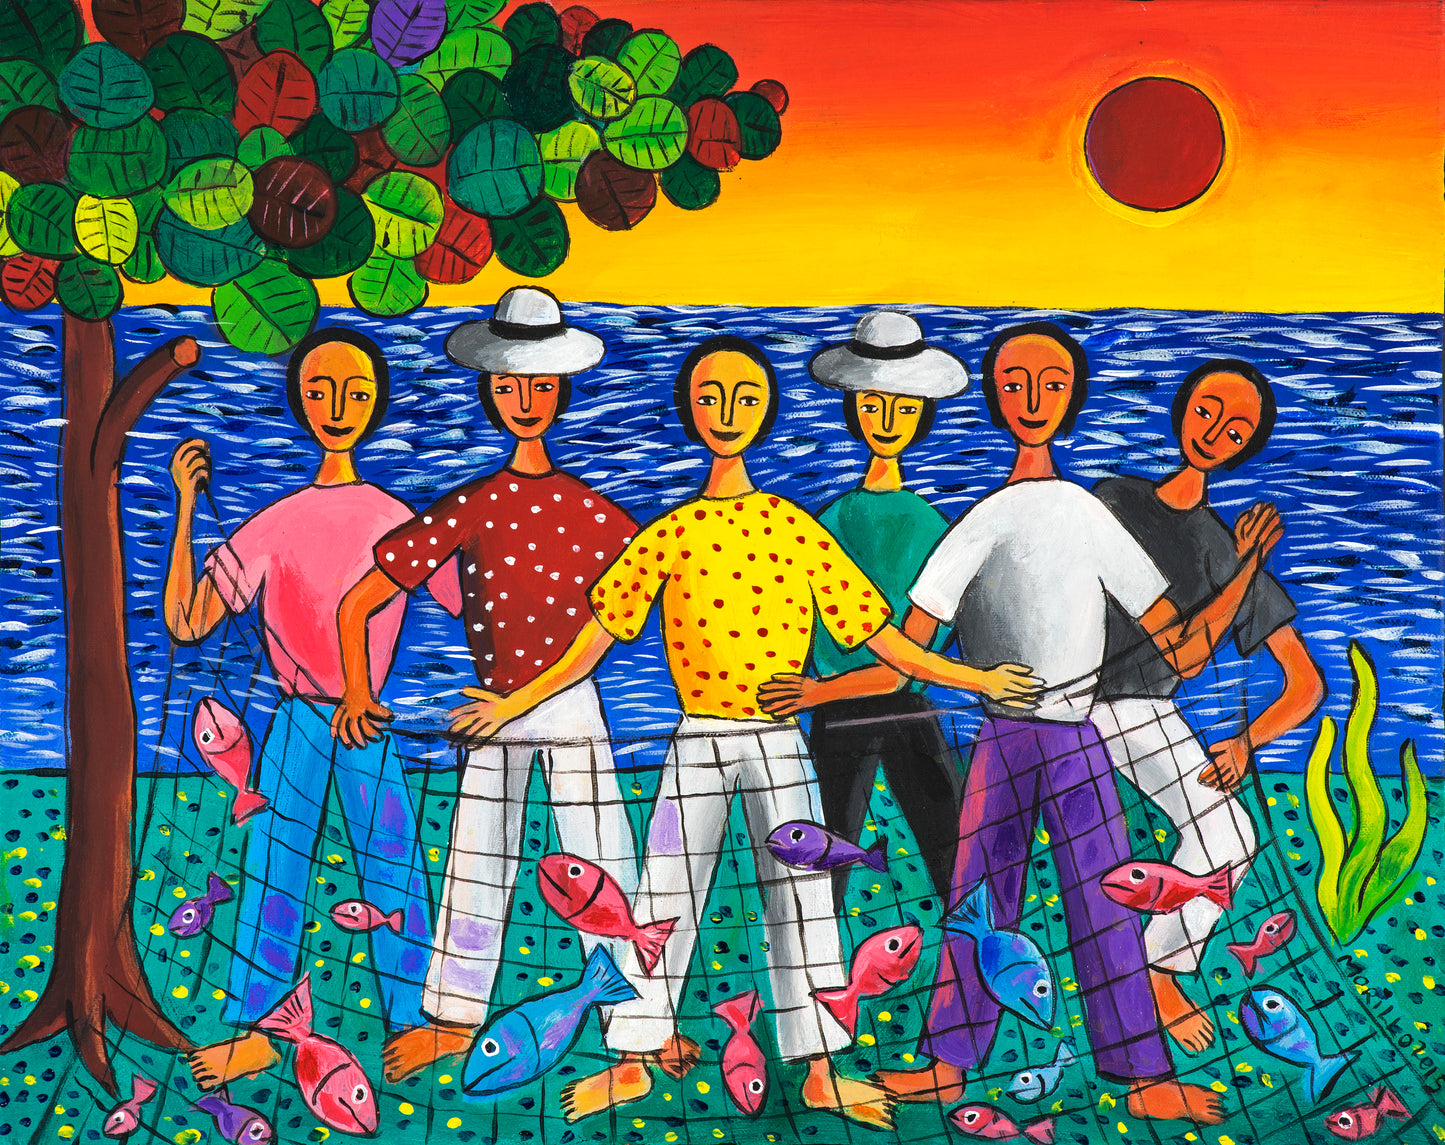 Jose Morillo 20"x24" The Fishermen 2015 Acrylic on Canvas #25JM-DR